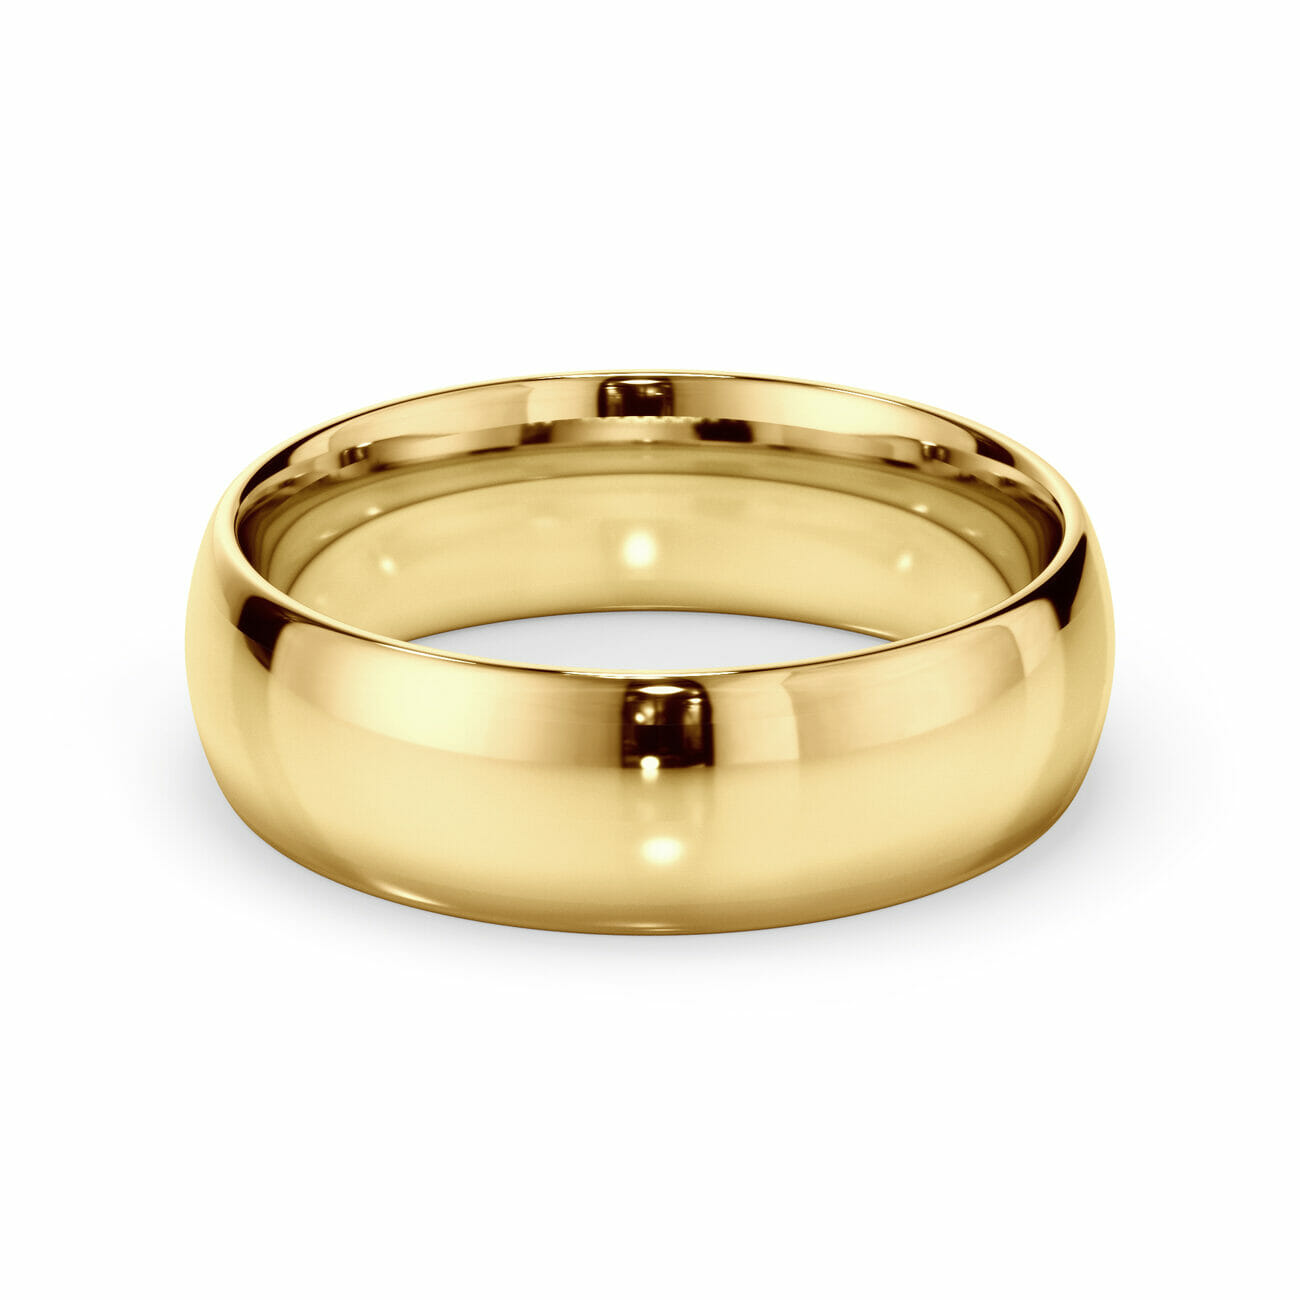 7mm Polished Mens Wedding Ring